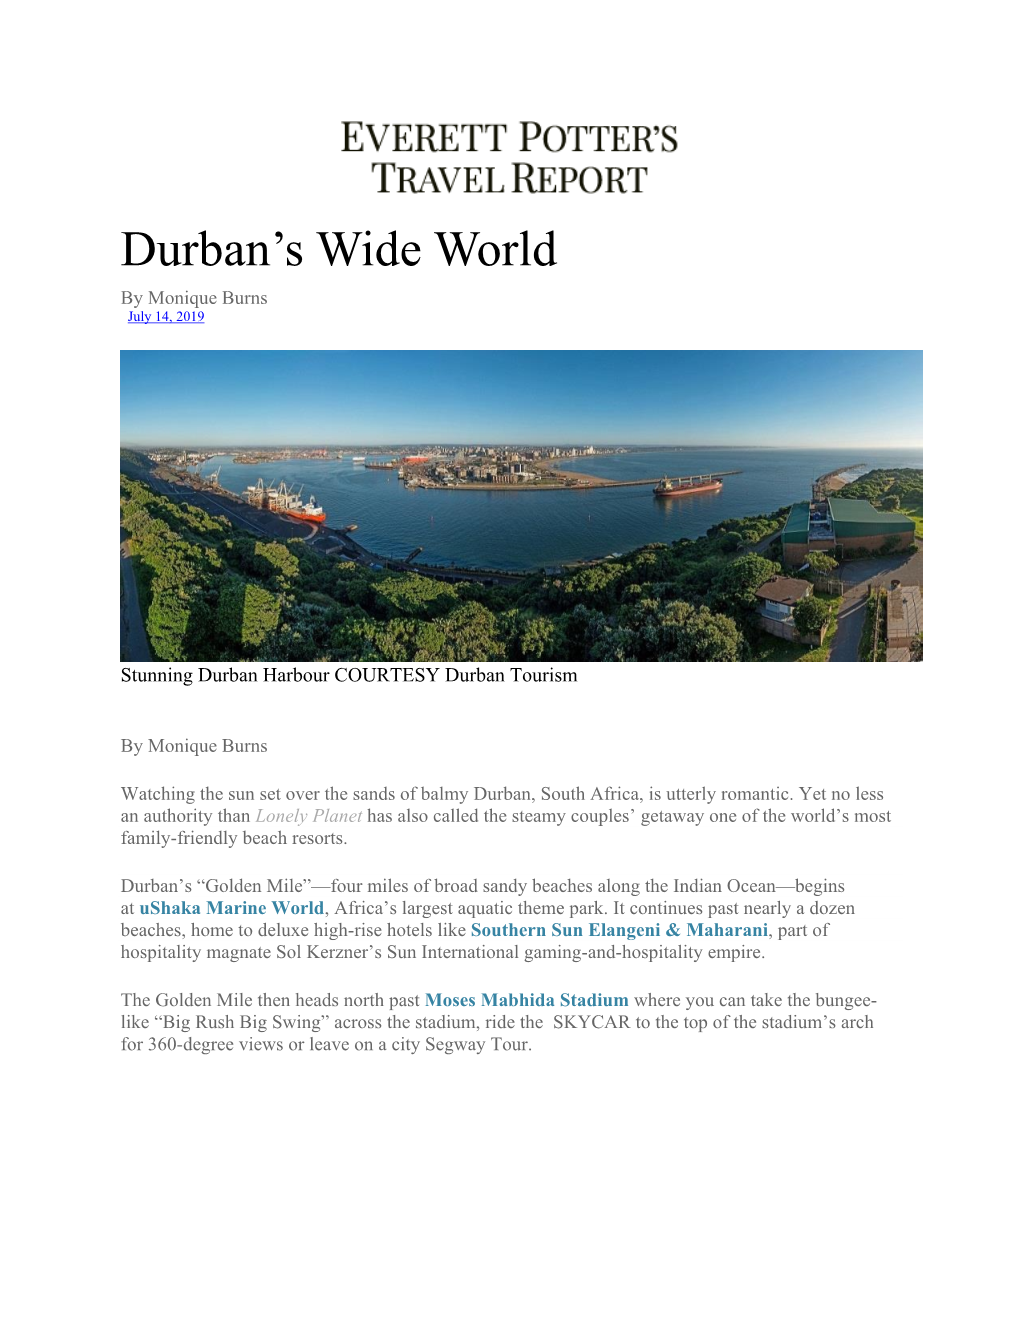 Everett Potter: Durban's Wide World Durban July 14, 2019